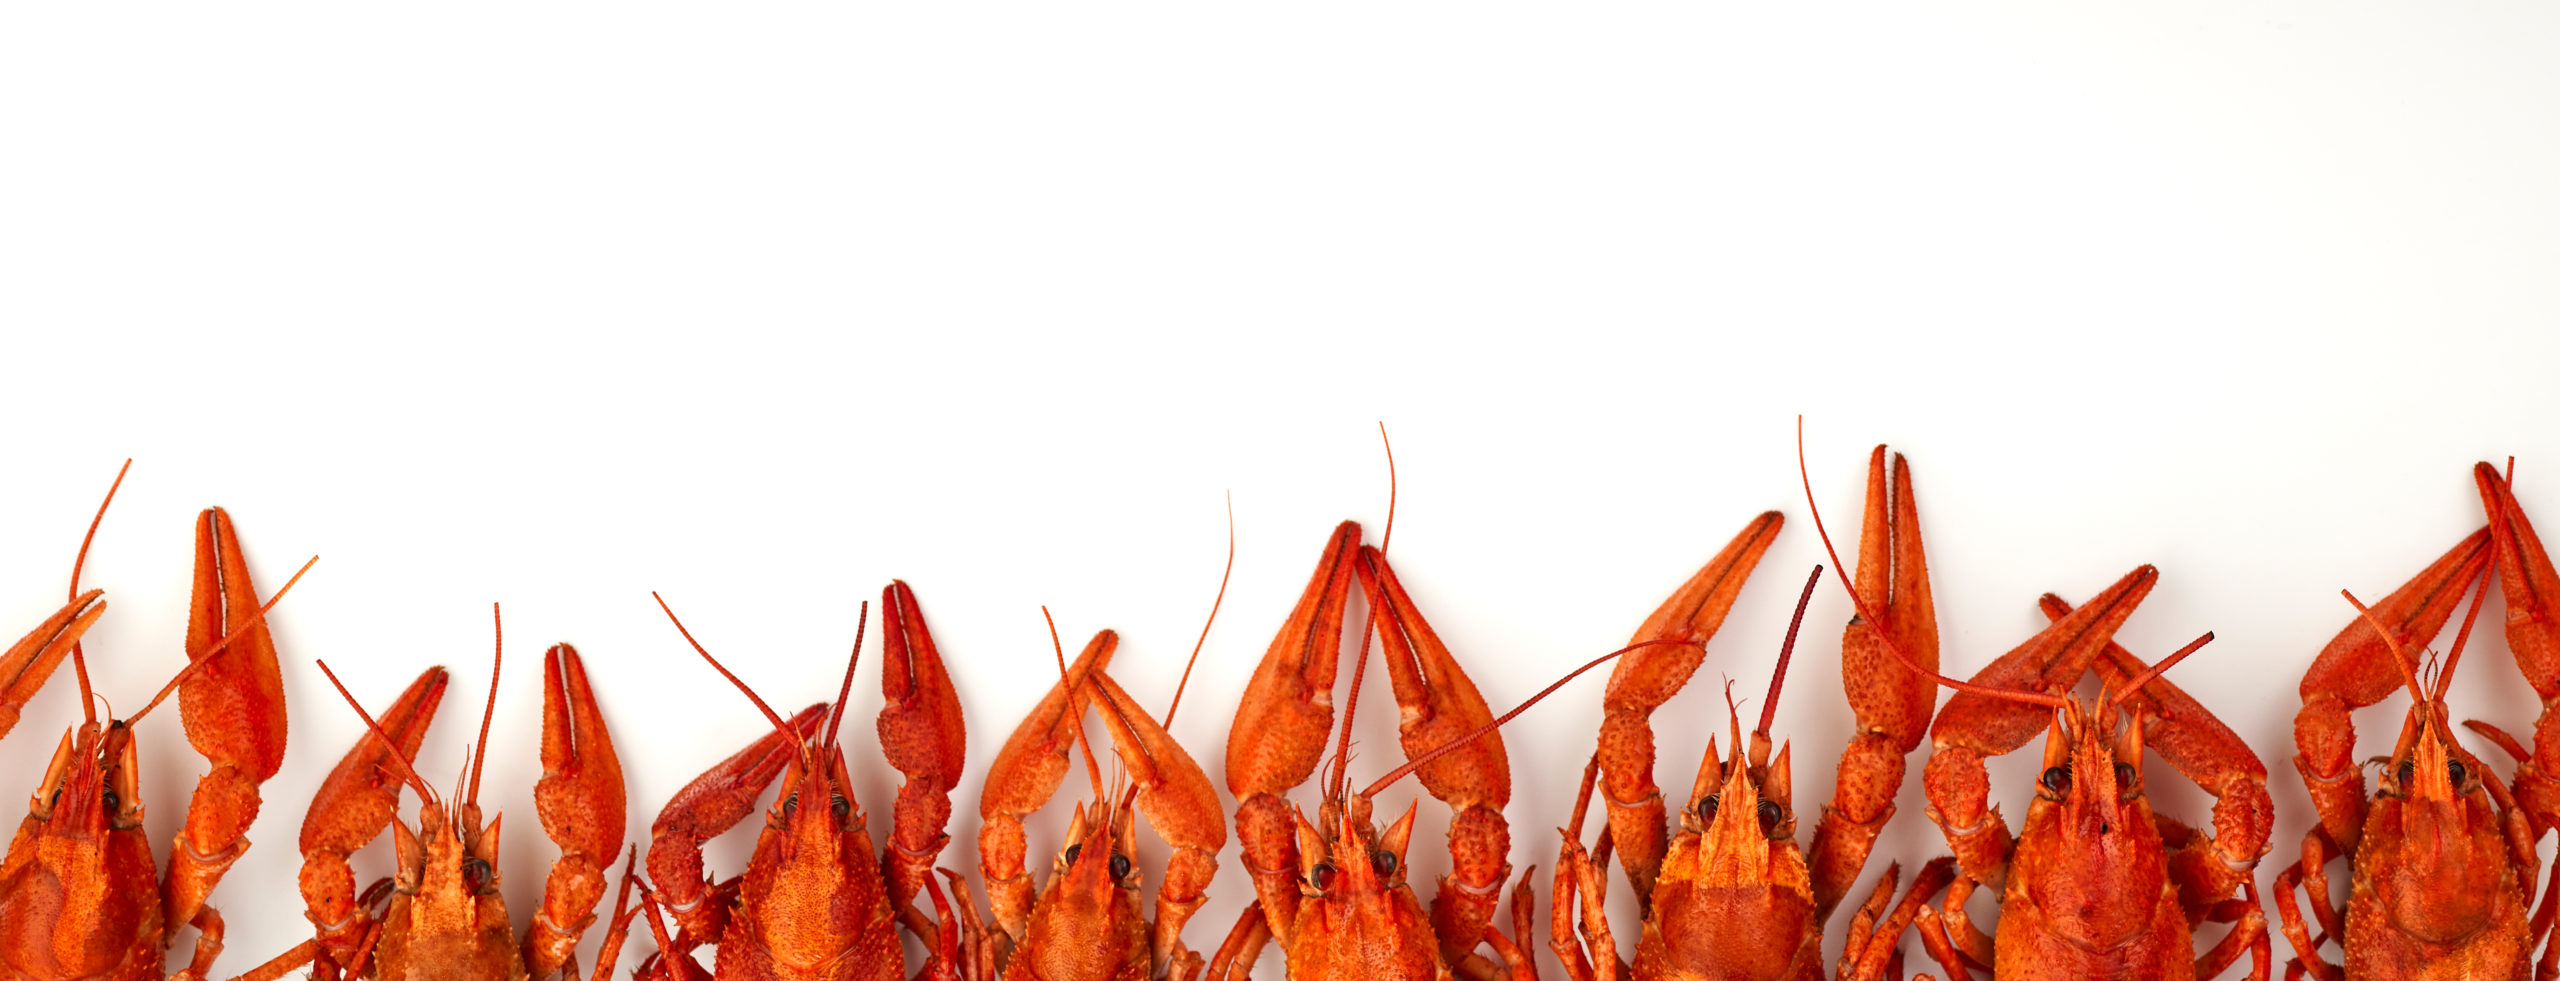 Are Boiled Crawfish Keto-Friendly?